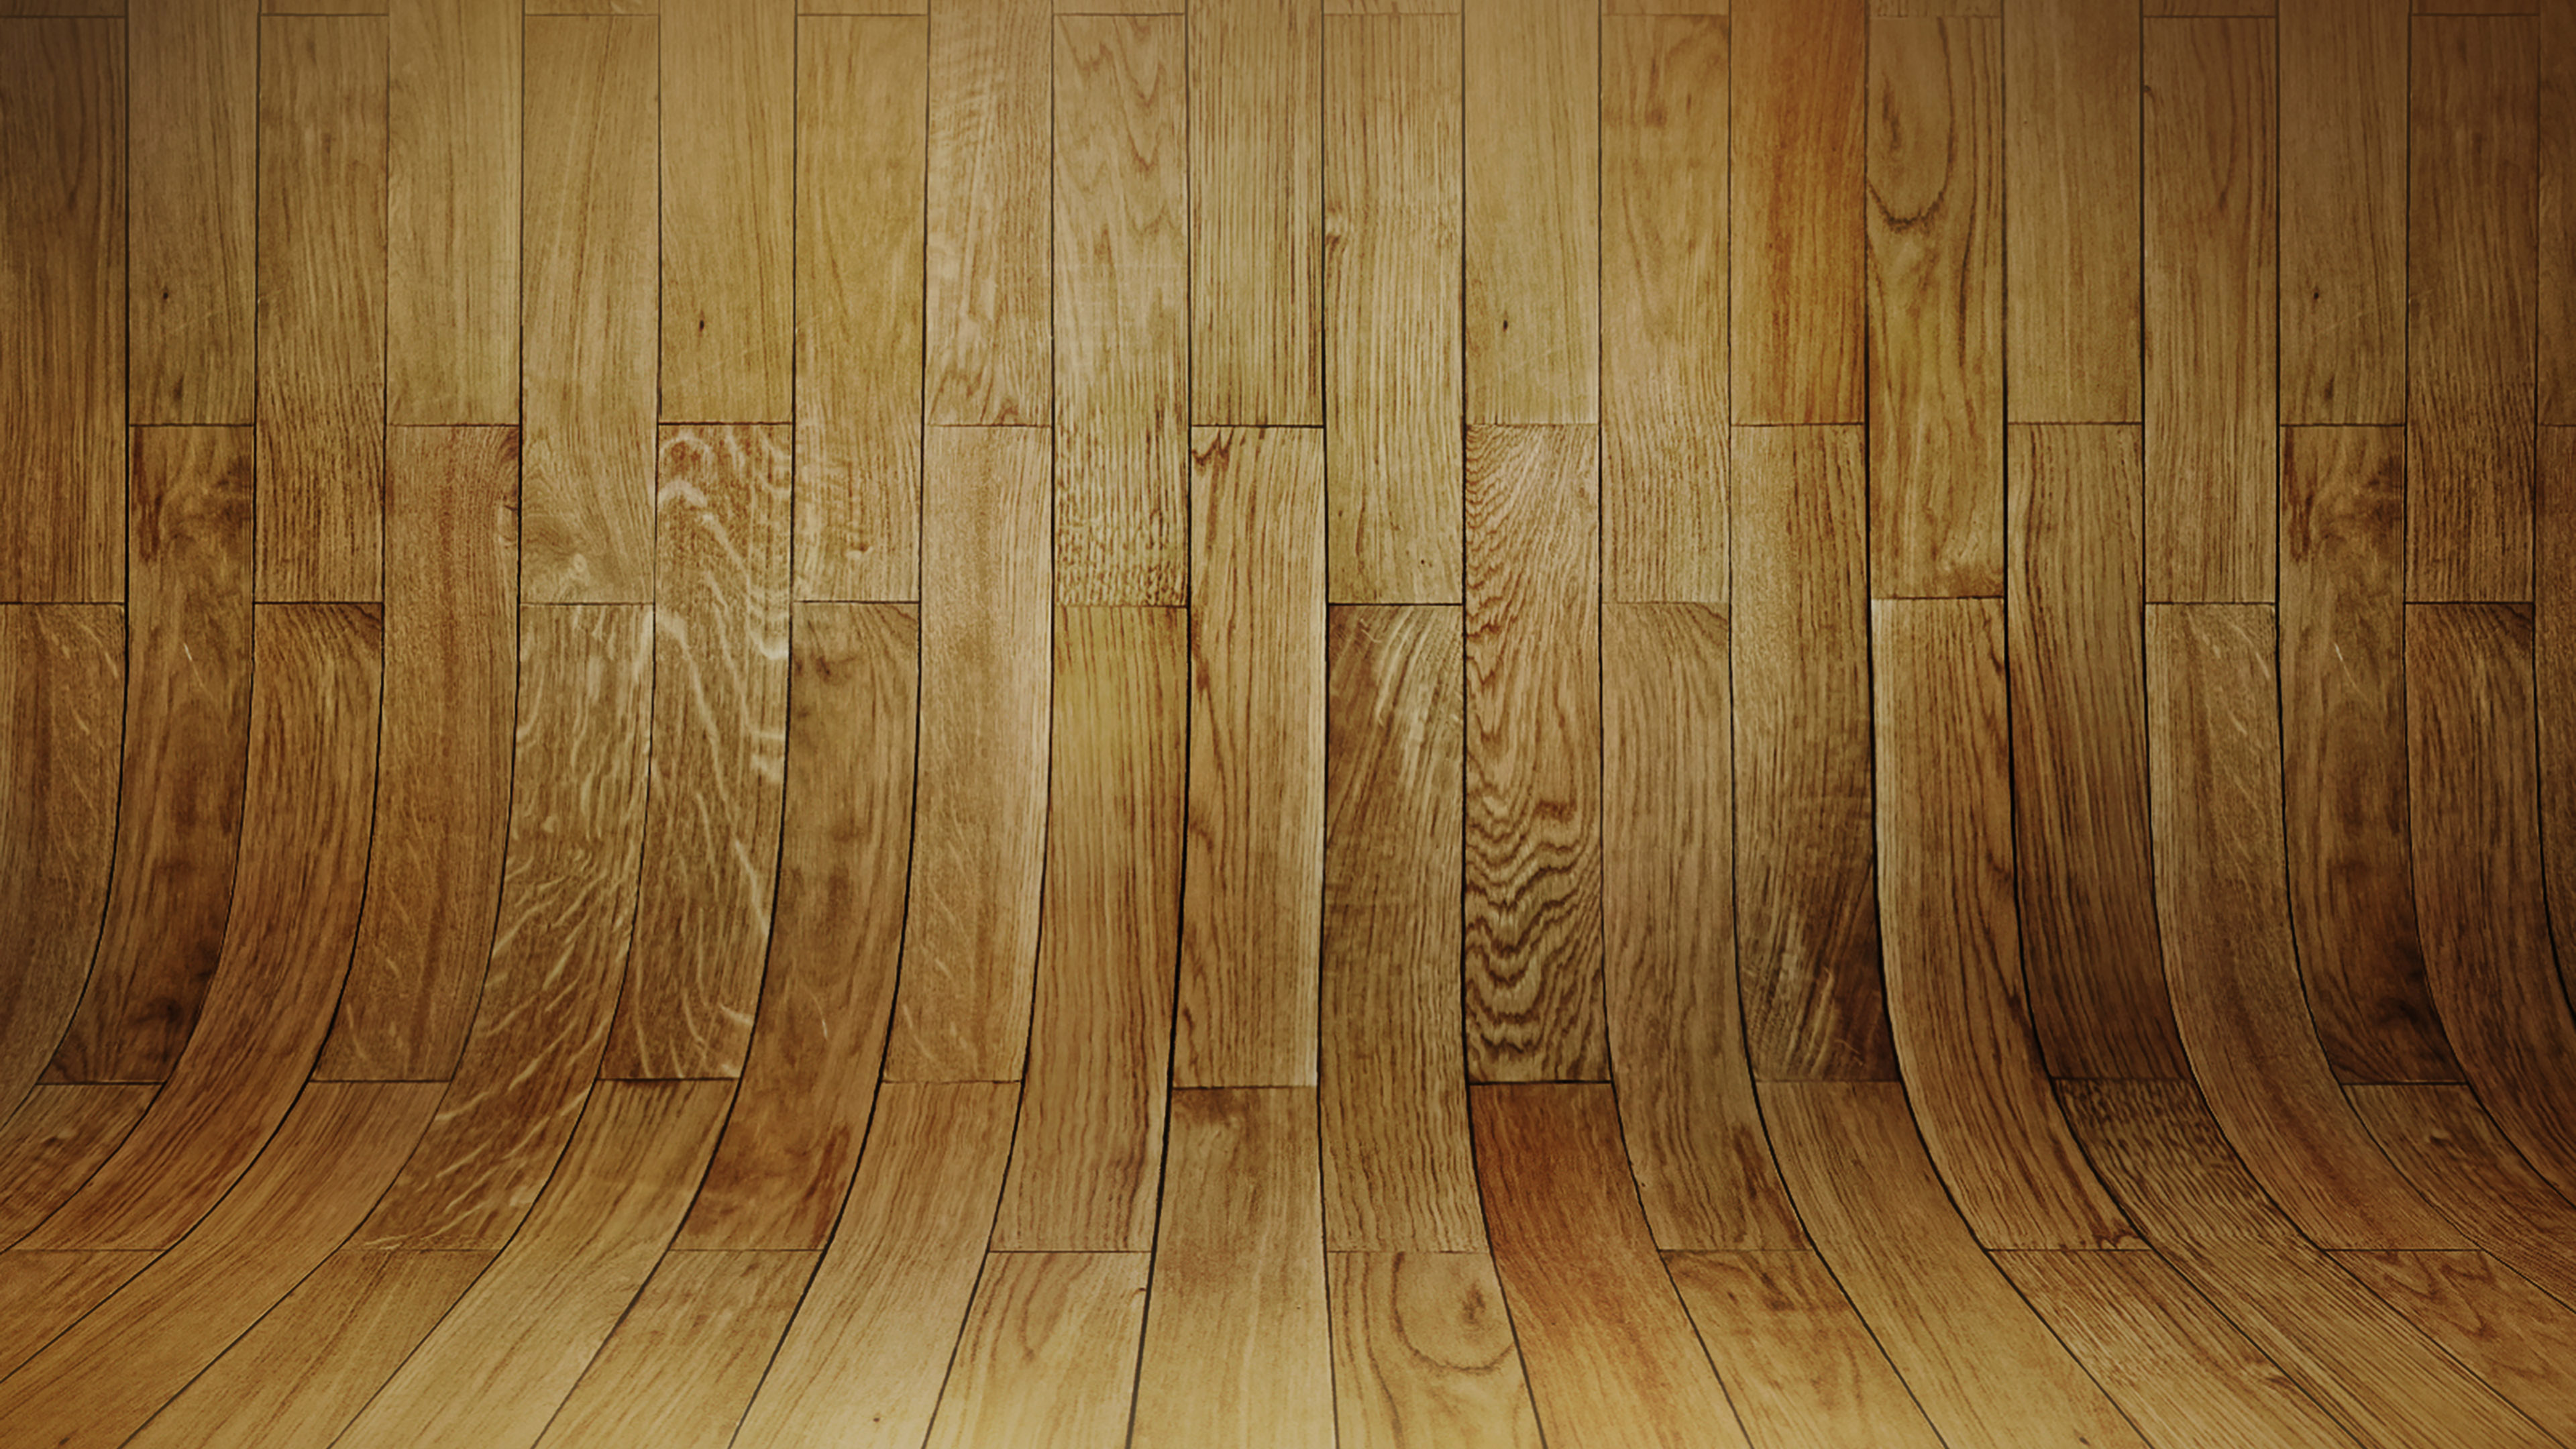 4k Wood Texture - 3840x2160 Wallpaper 